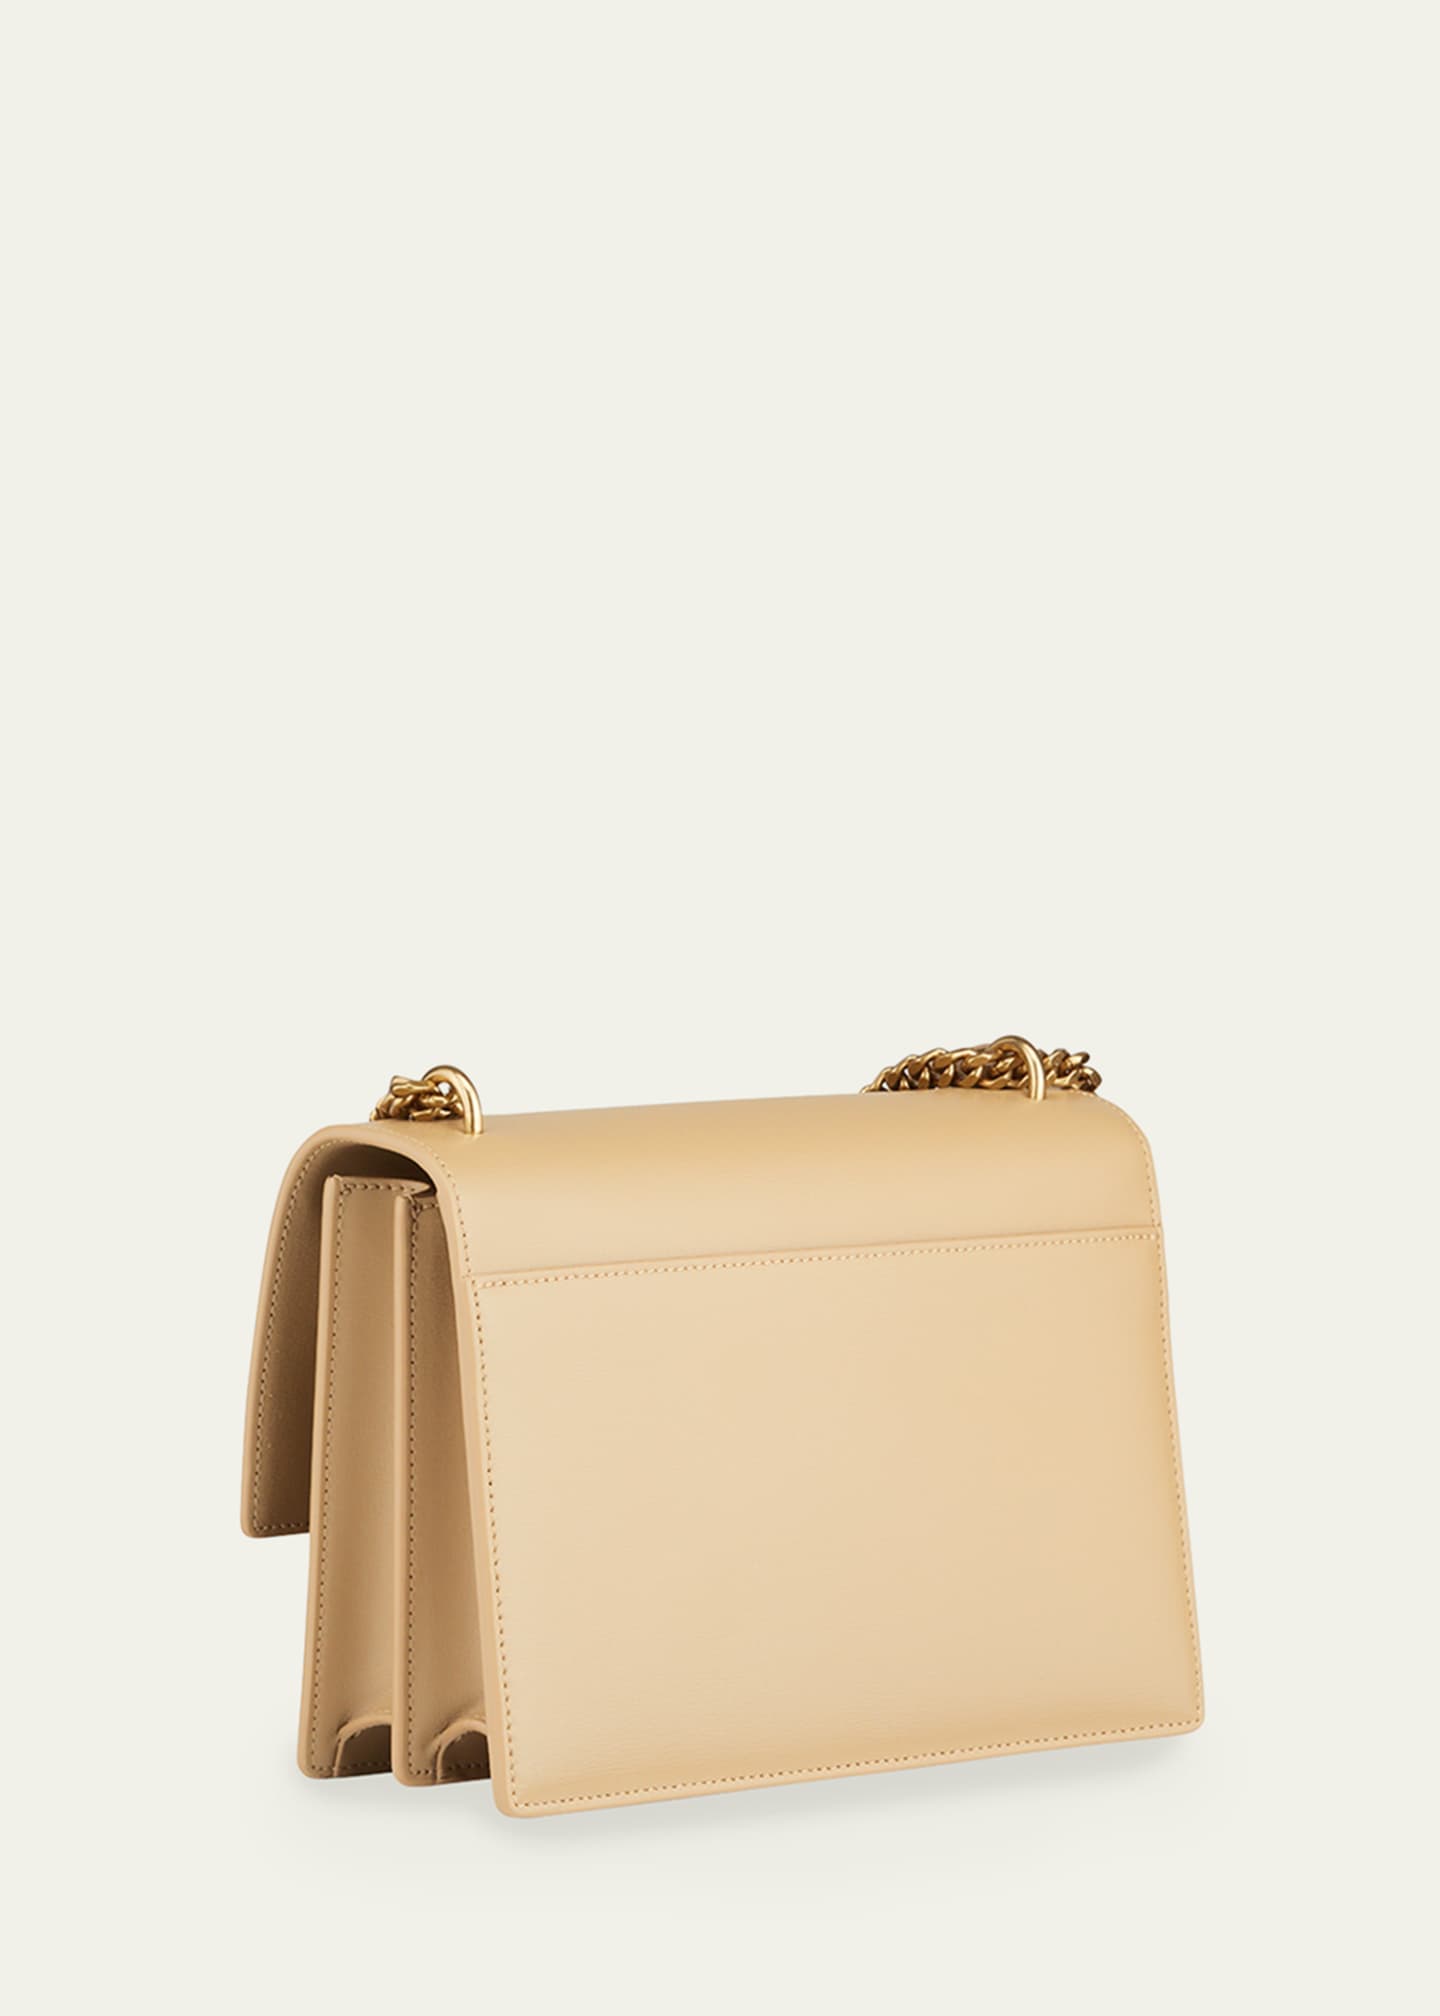 Saint Laurent Sunset Monogram Medium Leather Shoulder Bag in Brown